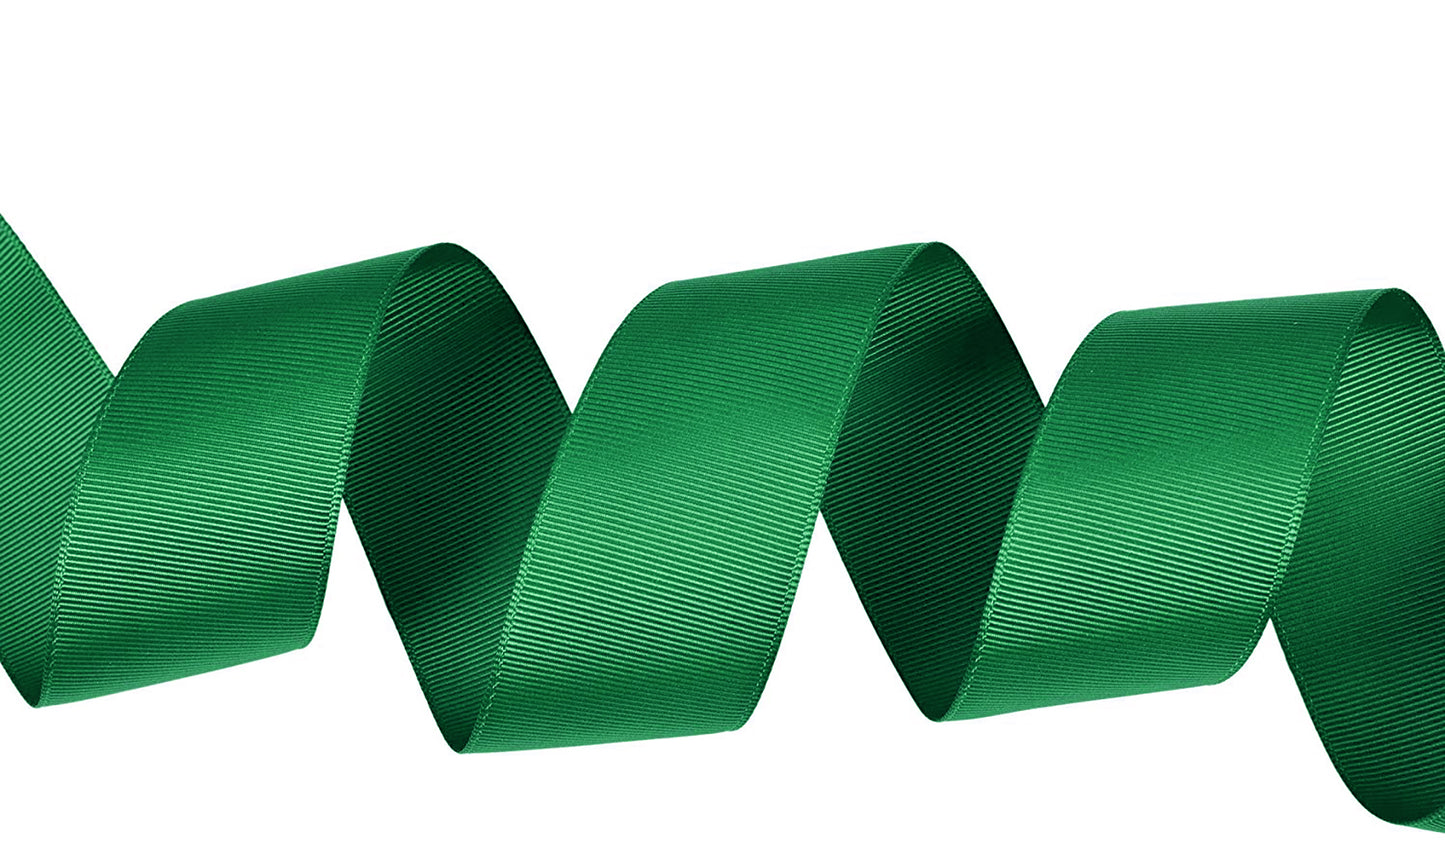 5 Yards Solid Emerald Green Grosgrain Ribbon Yardage DIY Crafts Bows USA